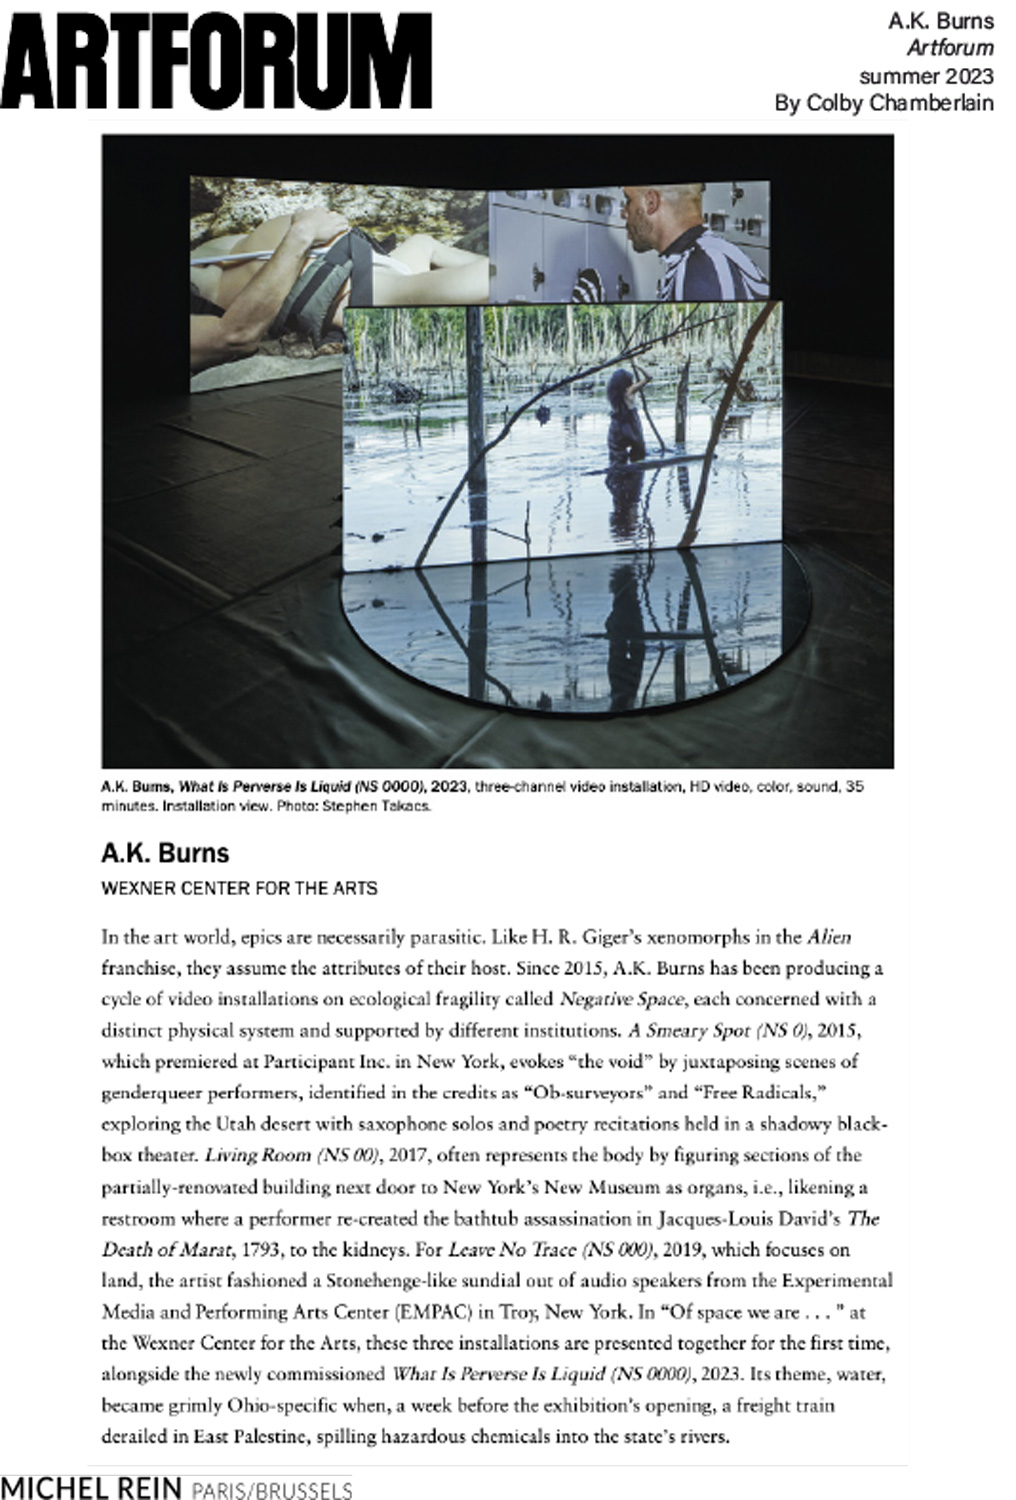 A.K. Burns, Wexner Center for the Arts - Artforum